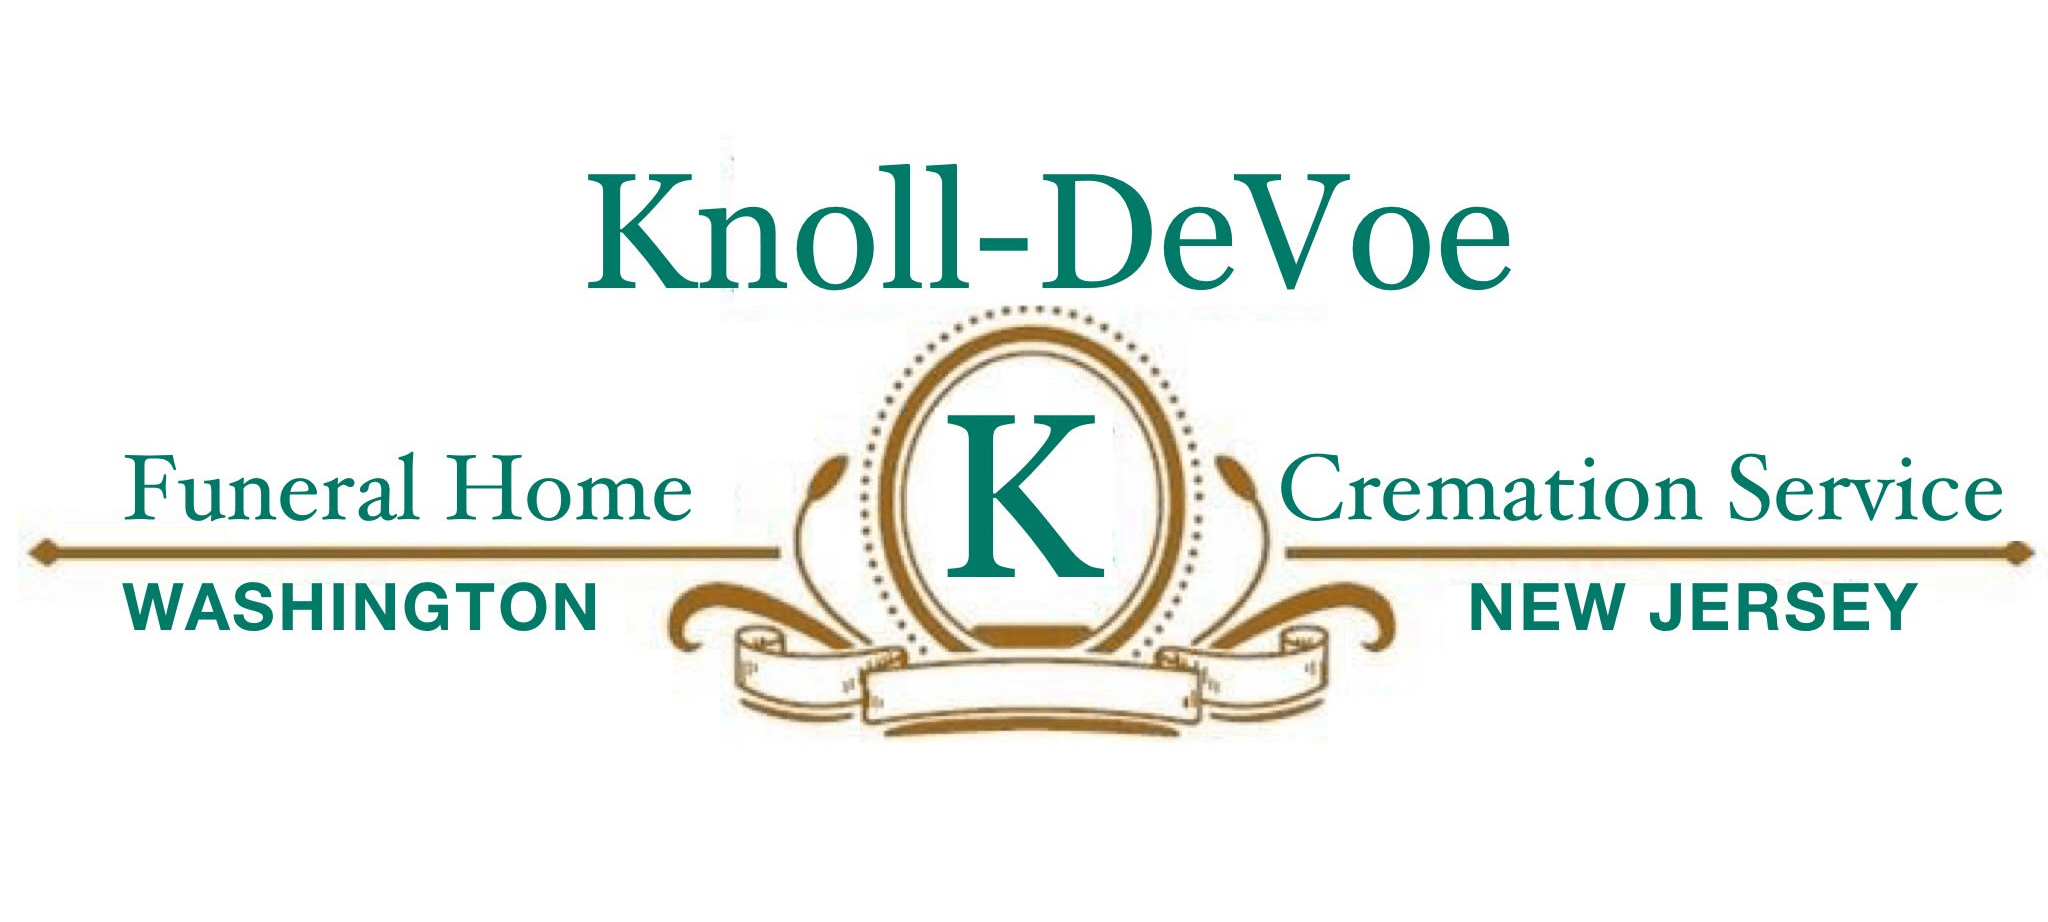 Knoll-Devoe Funeral Home